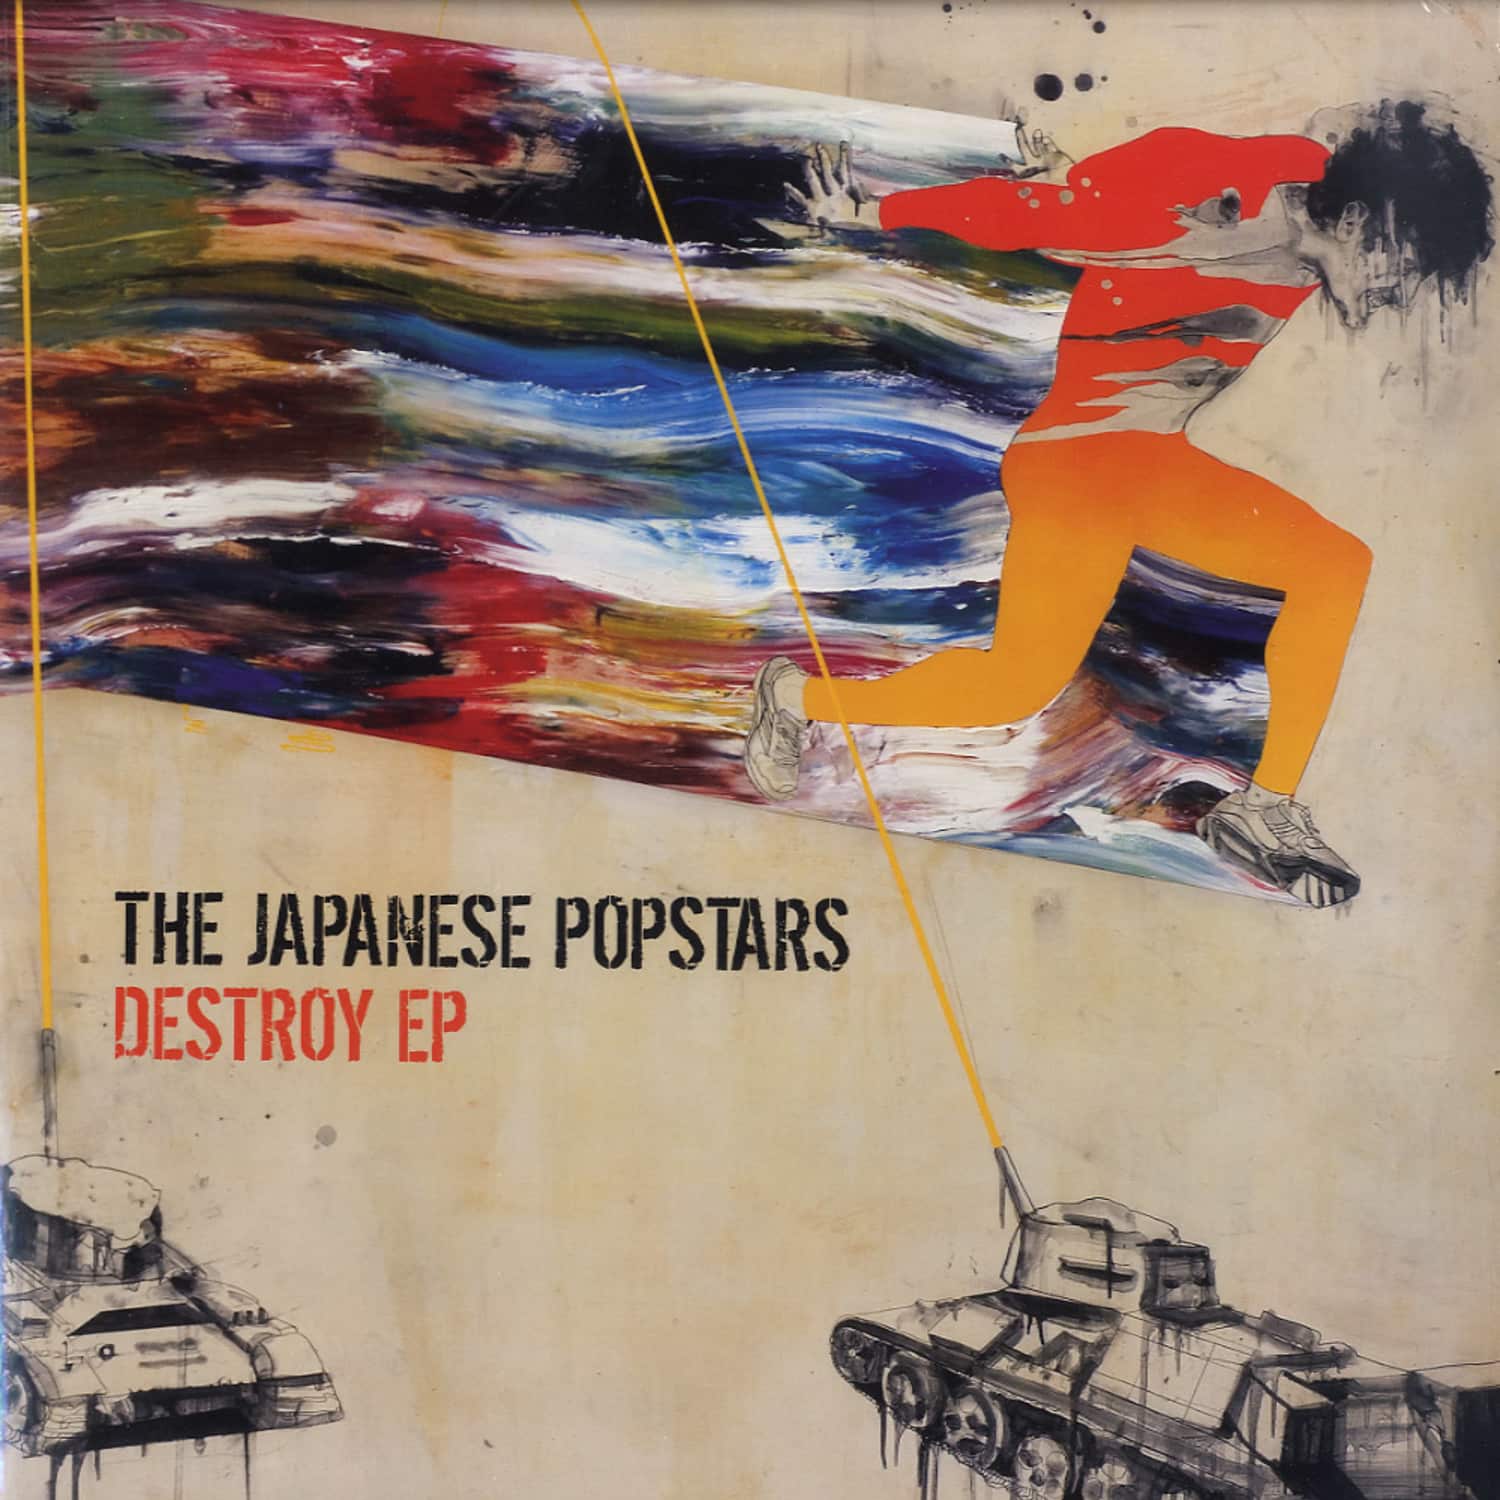 The Japanese Popstars - DESTROY EP 